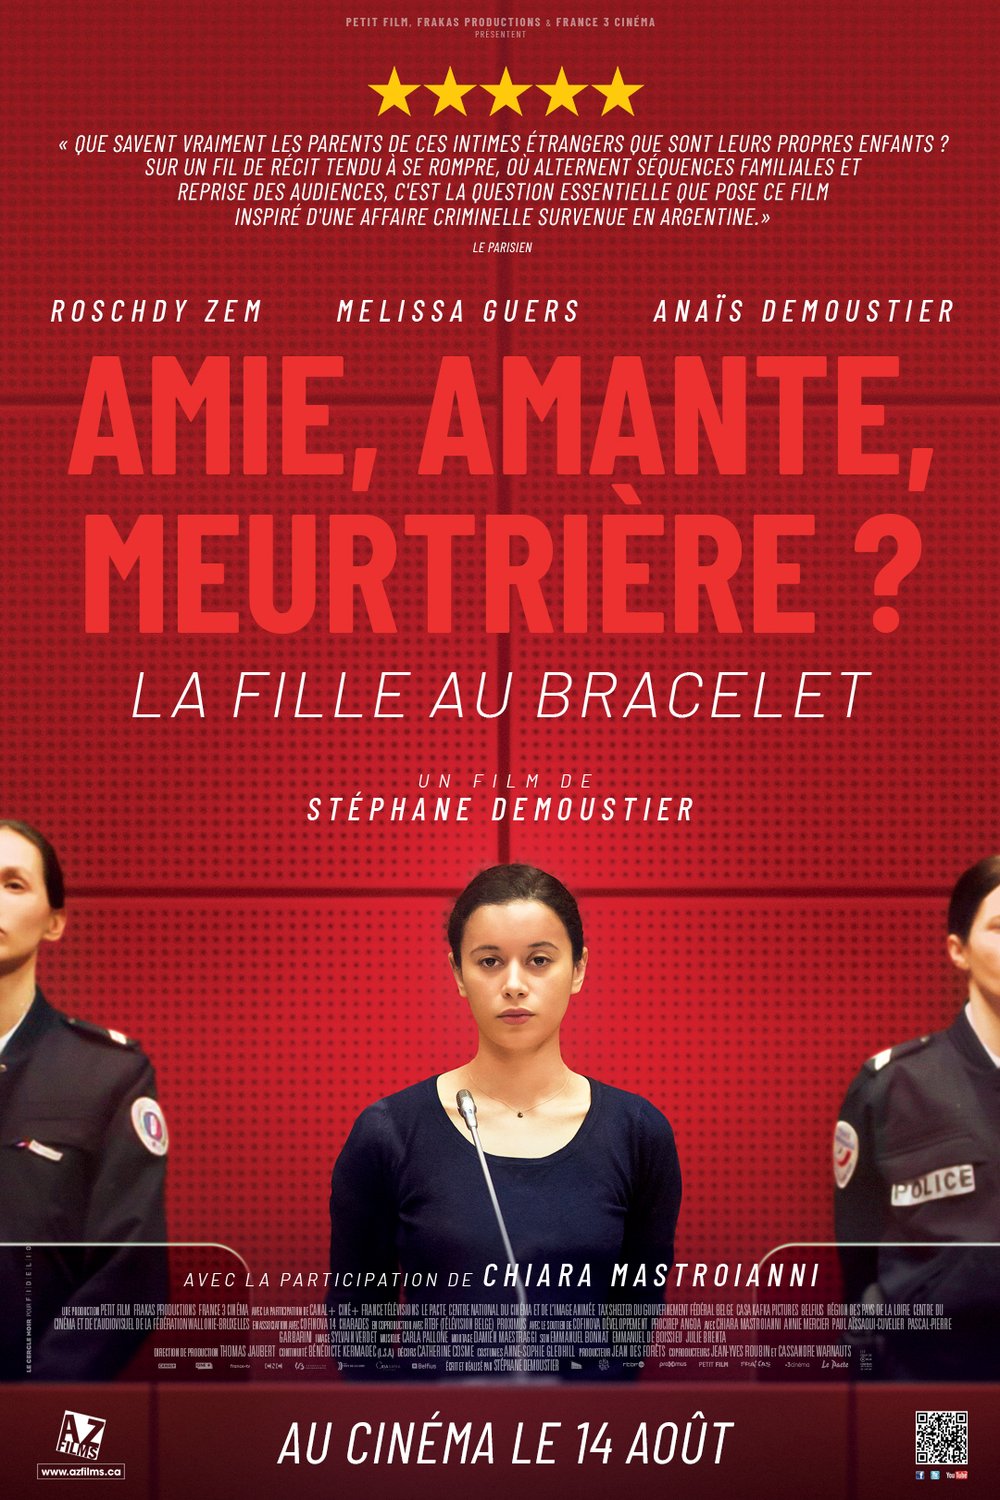 Poster of the movie La fille au bracelet